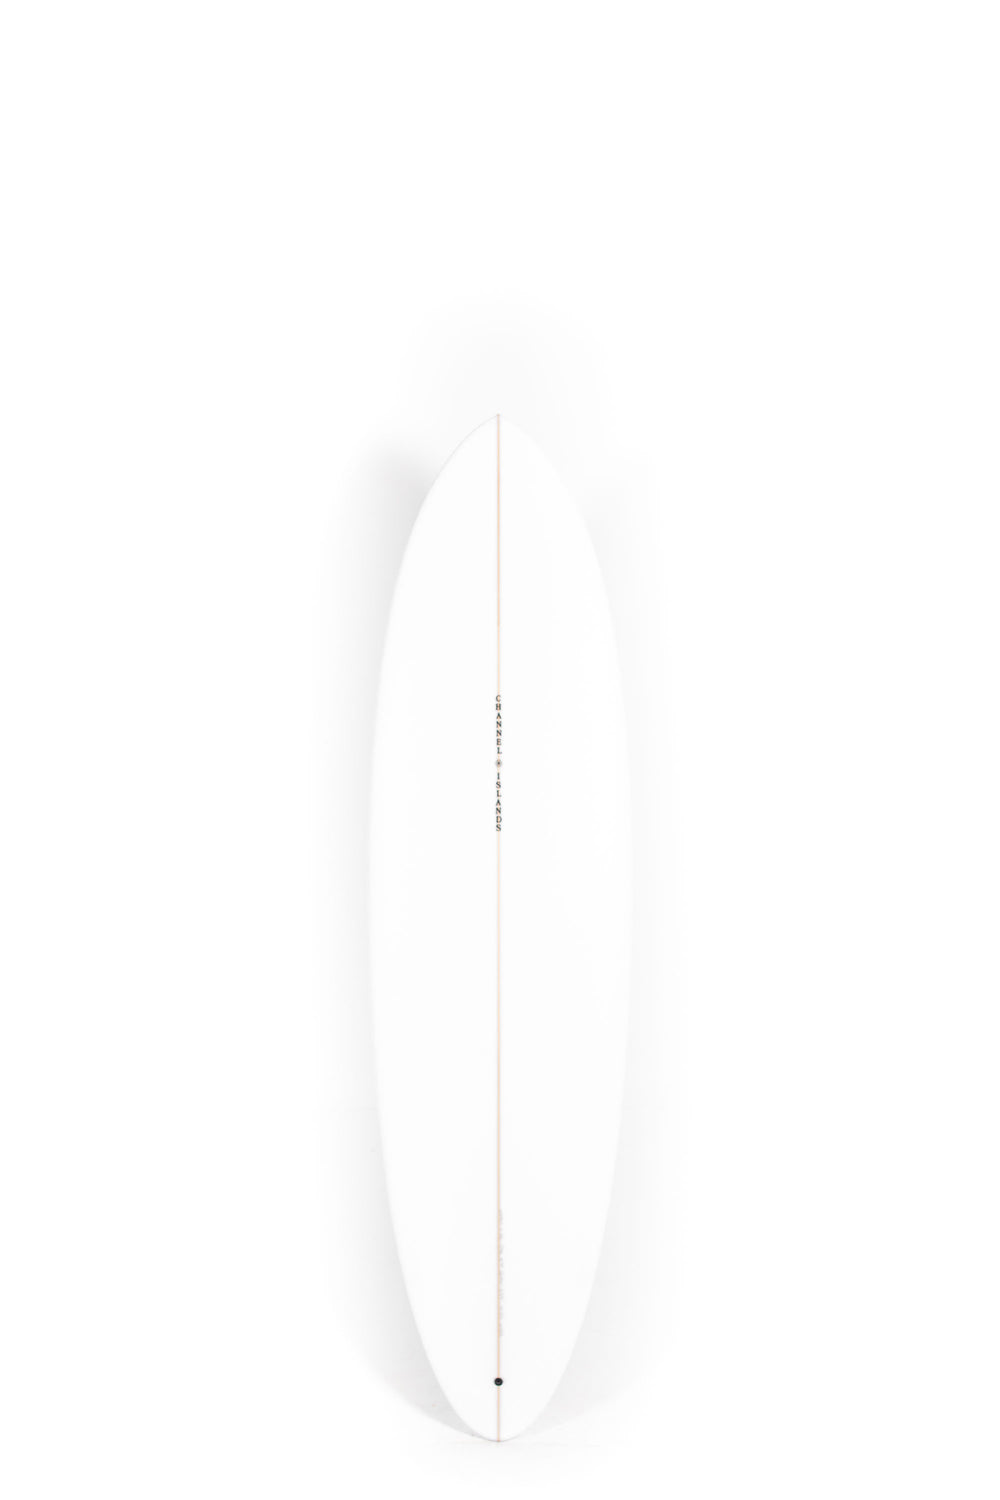 Pukas-Surf-Shop-Channel-Island-Surfboards-CI-Mid-Al-Merrick-6_8_-CI31914